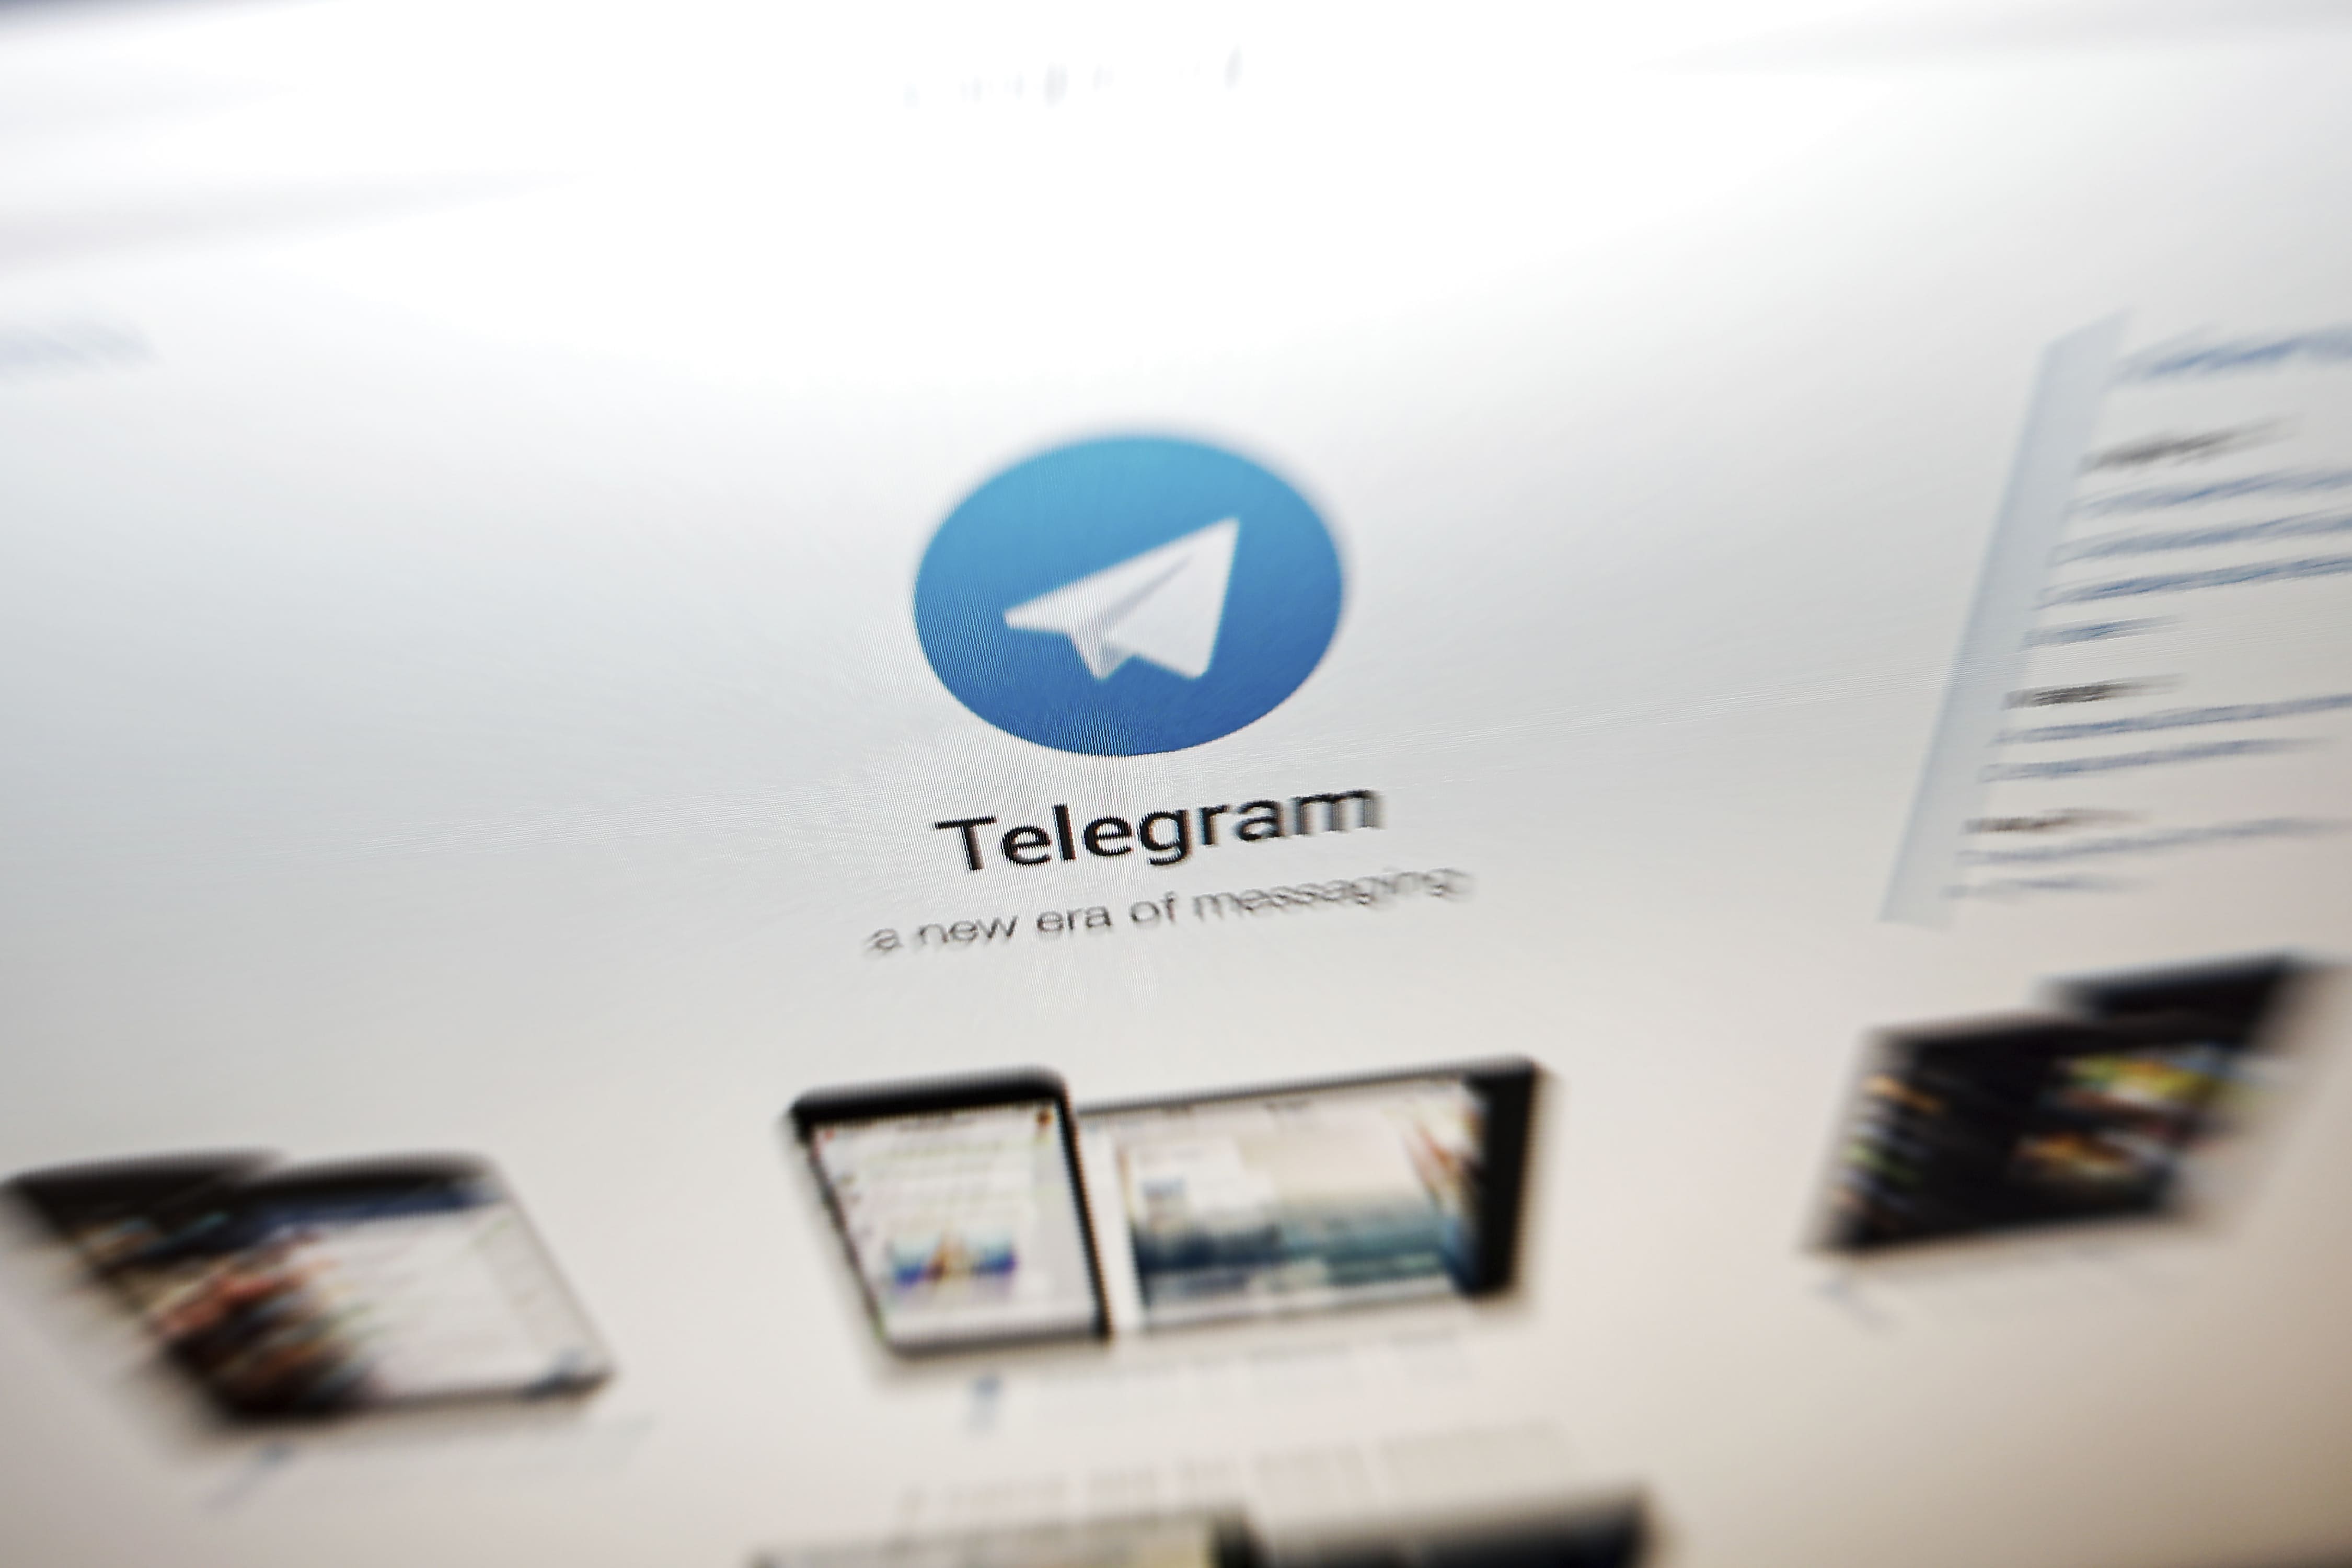 takian.ir ukraine warns of cyber attack aiming to hack users telegram messenger account 1